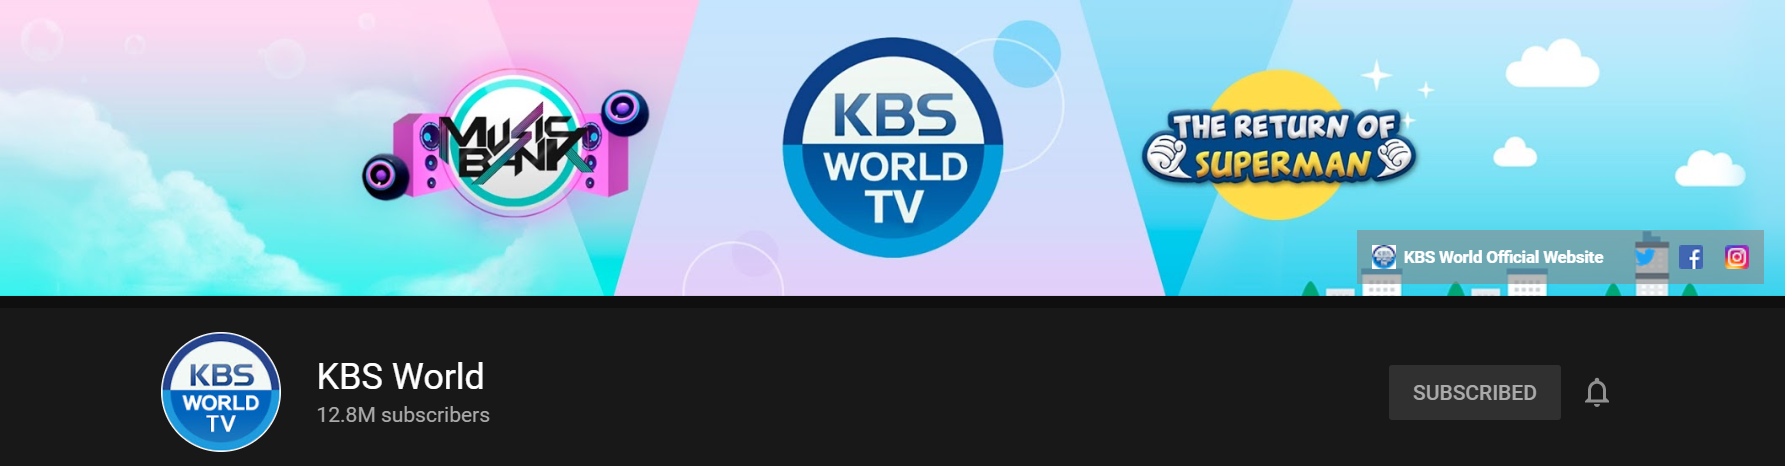 kbs world